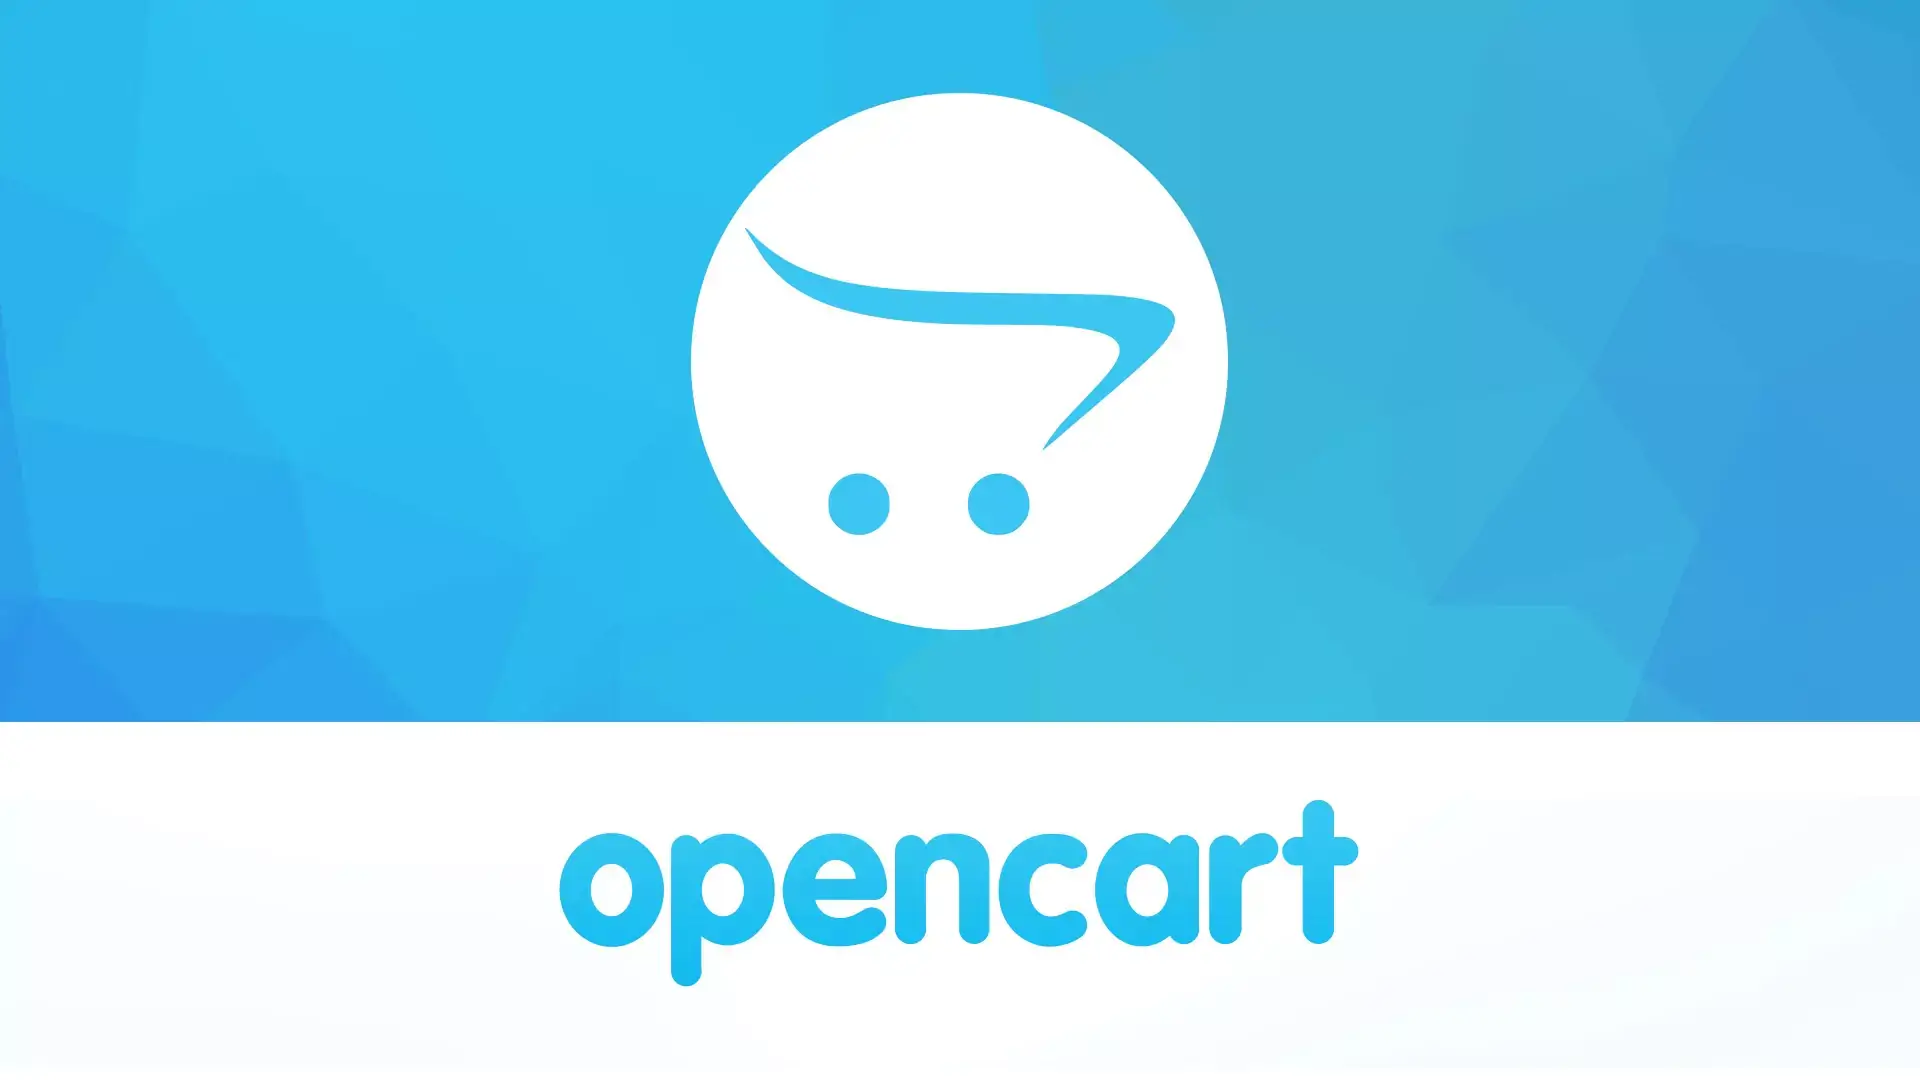 OpenCart eCommerce platform